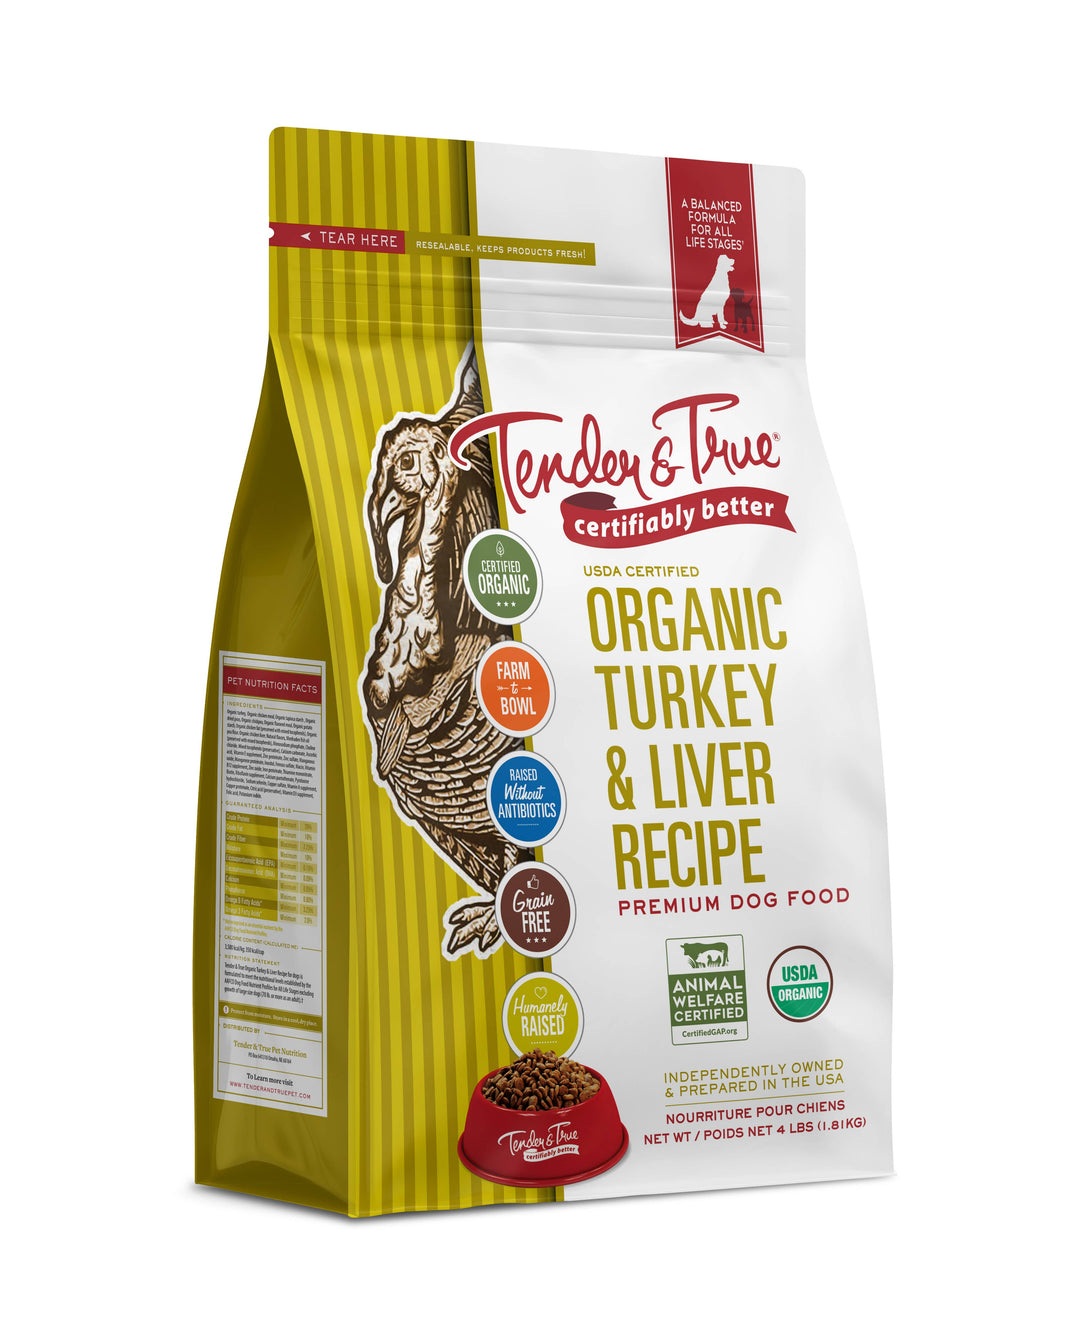 Organic Turkey & Liver Recipe Dry Dog Food, small bag